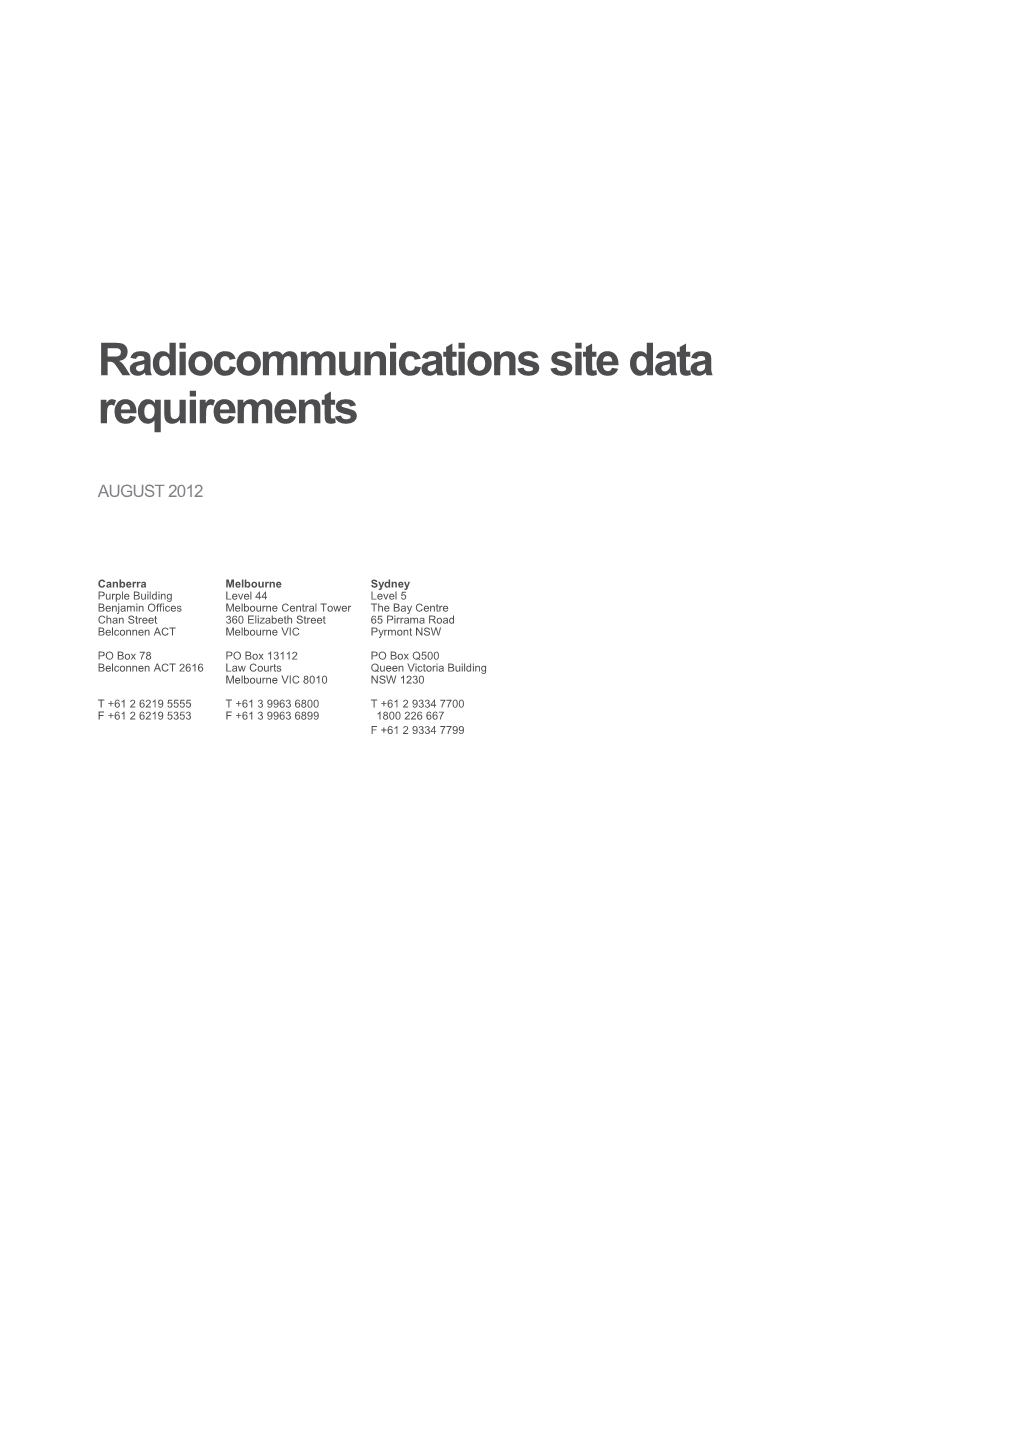 Radiocommunications Site Data Requirements